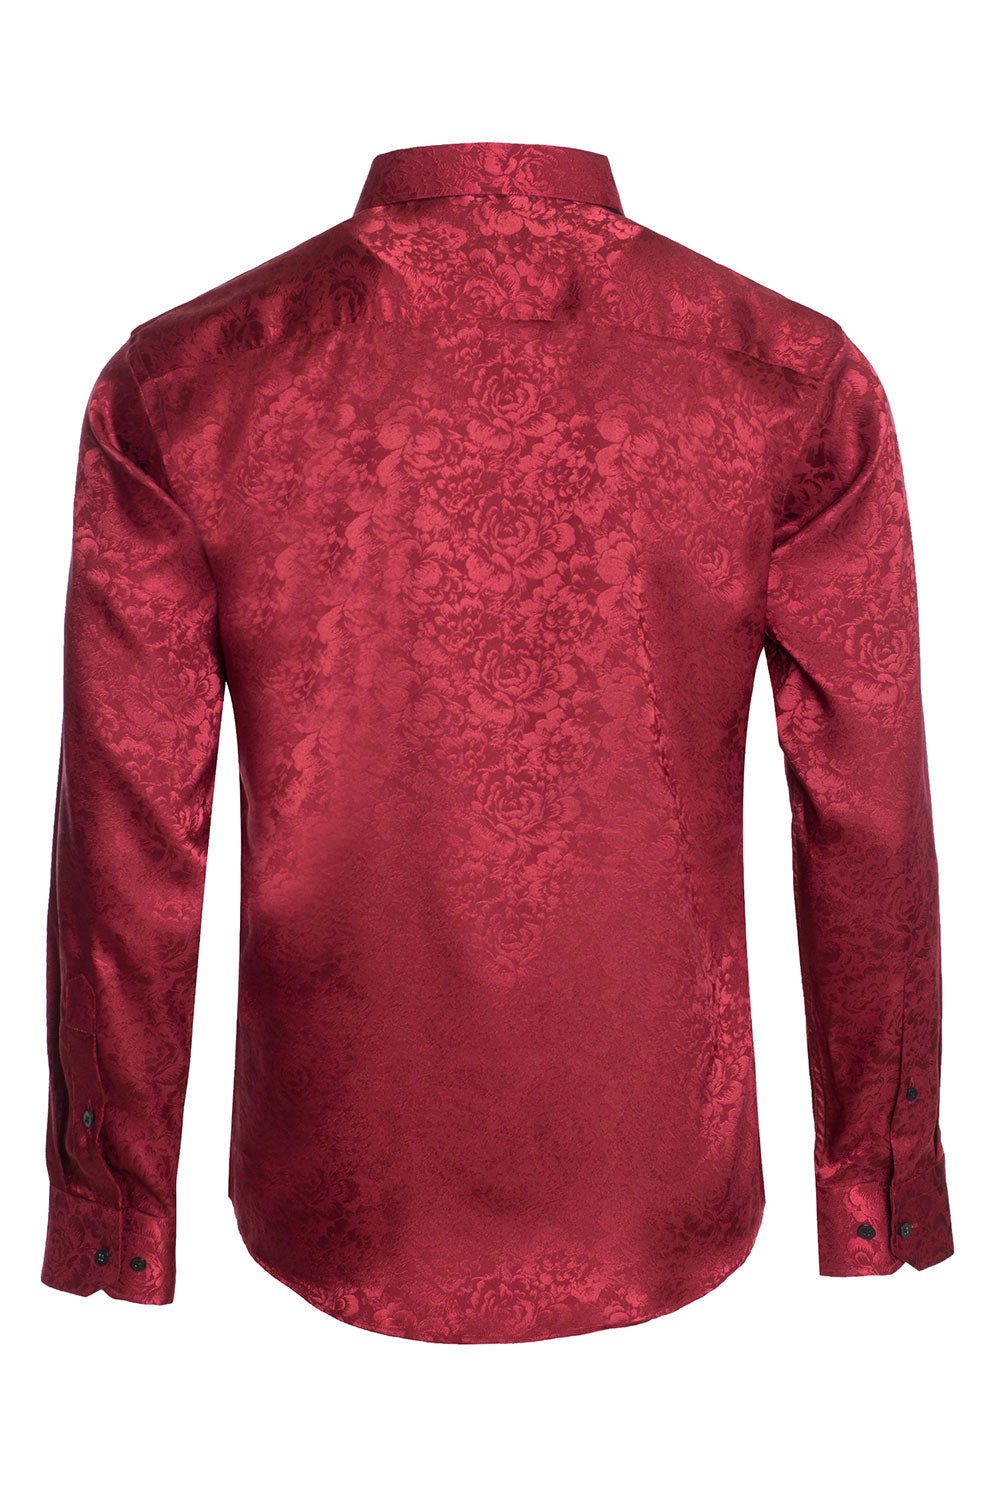 BARABAS Men's textured floral button down dress shirts B309 burgundy